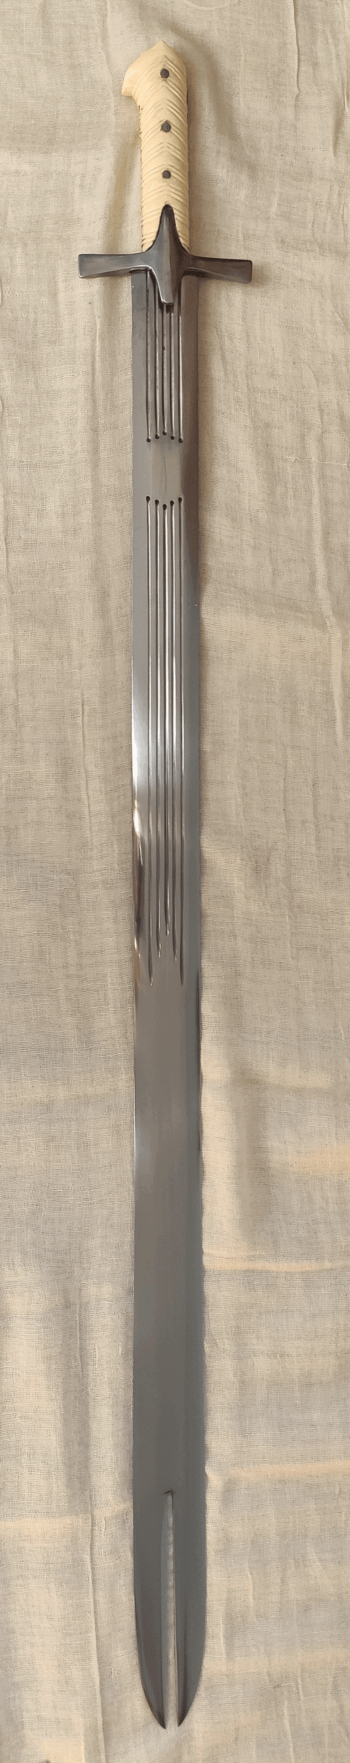 Windlass - Forked Blade Sword